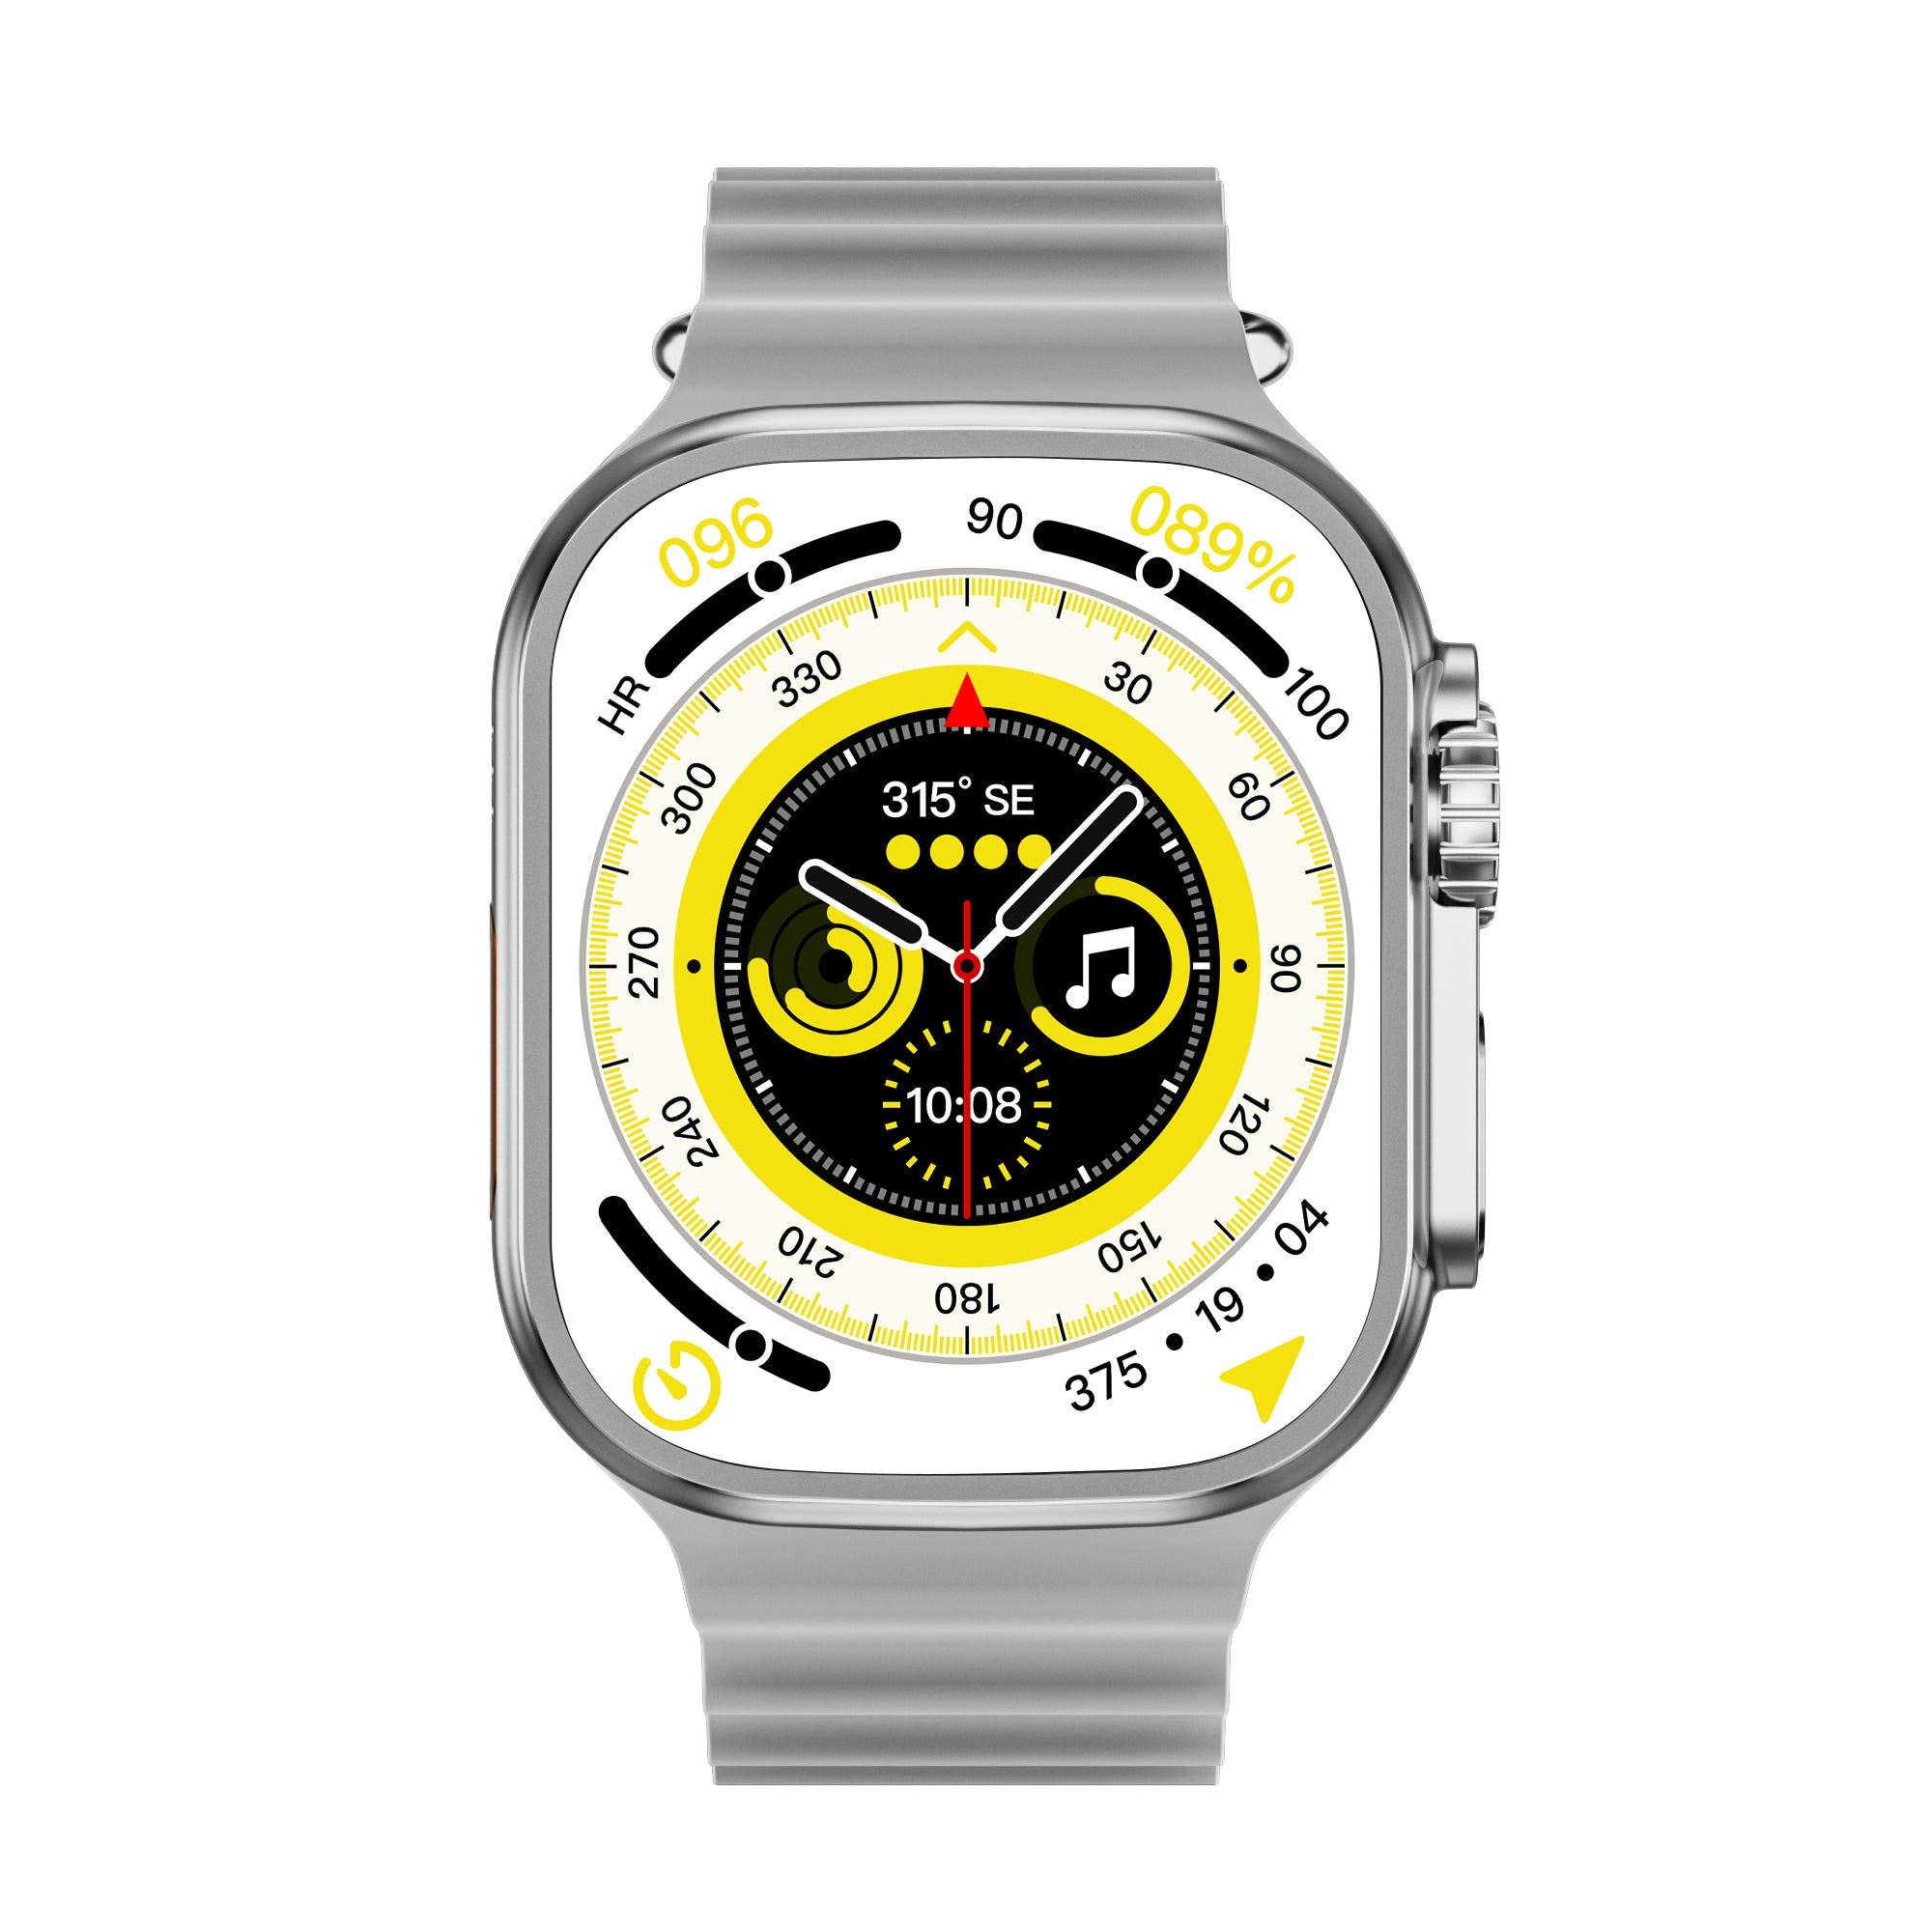 BlackZone GURU Smartwatch with multiple straps available